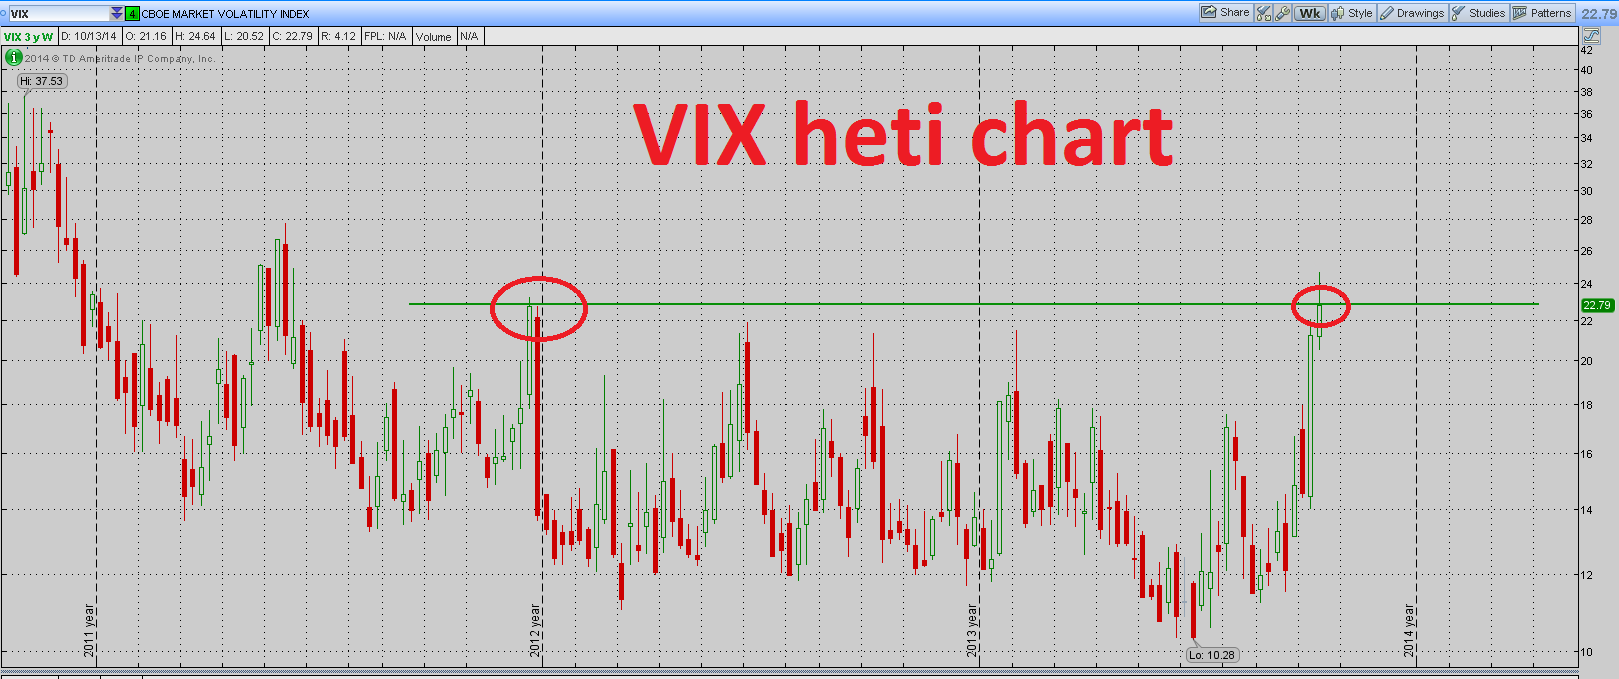 VIX heti chart